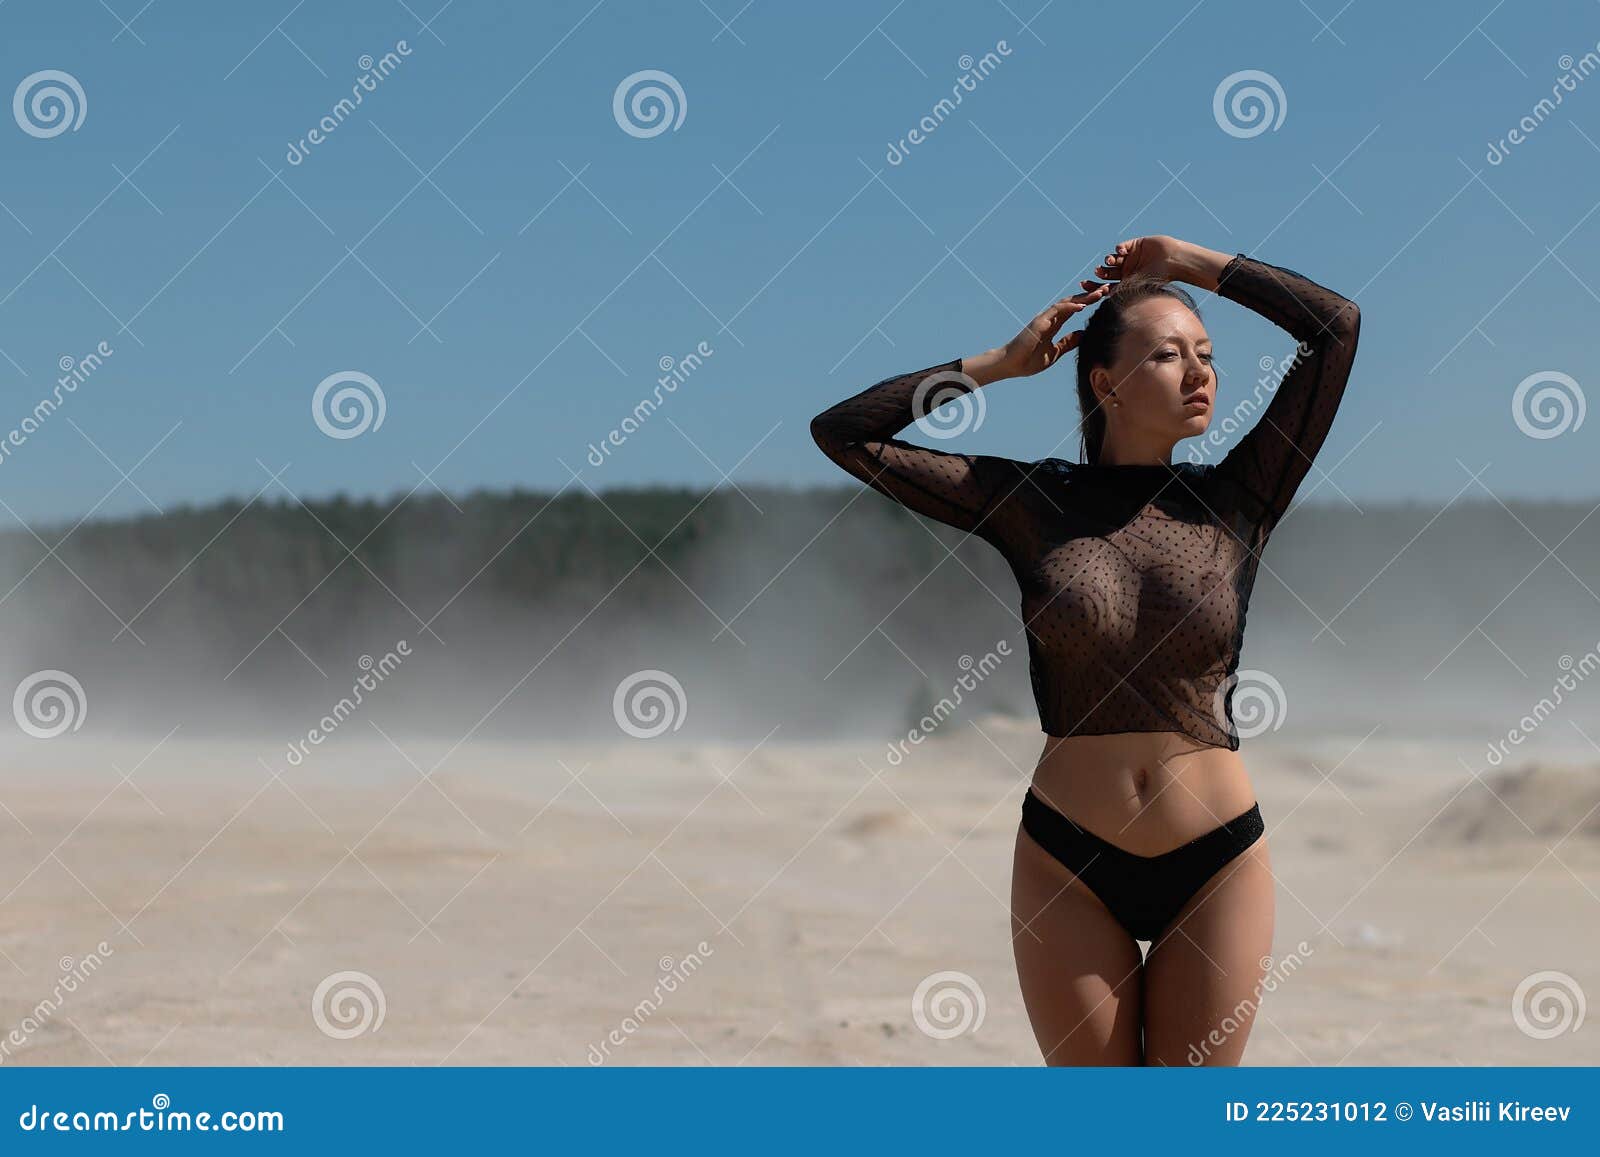 women at the beach